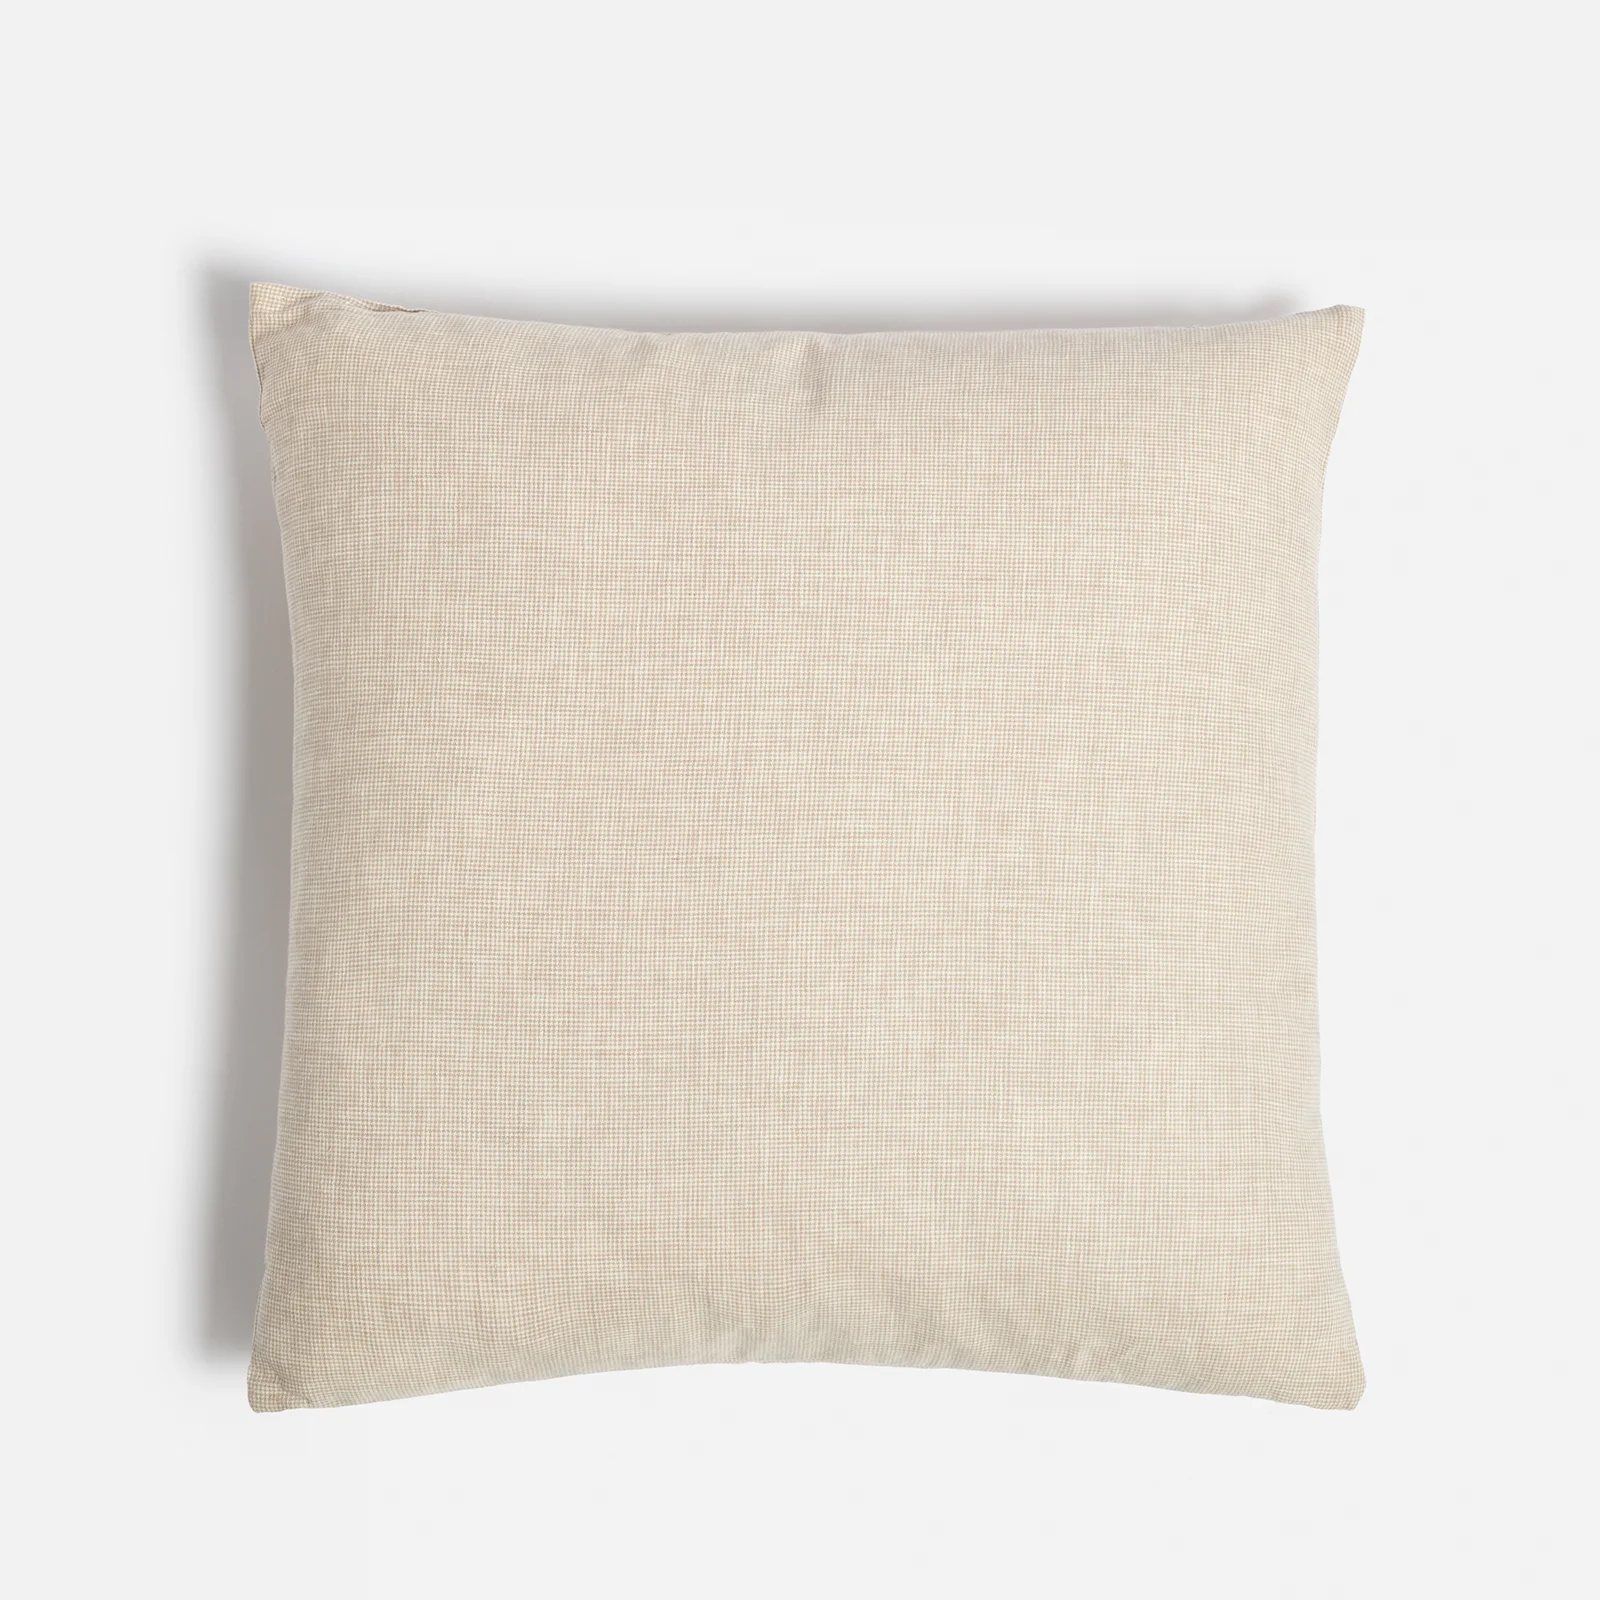 ïn home Linen Cotton Cushion - Natural - 50x50cm Image 1